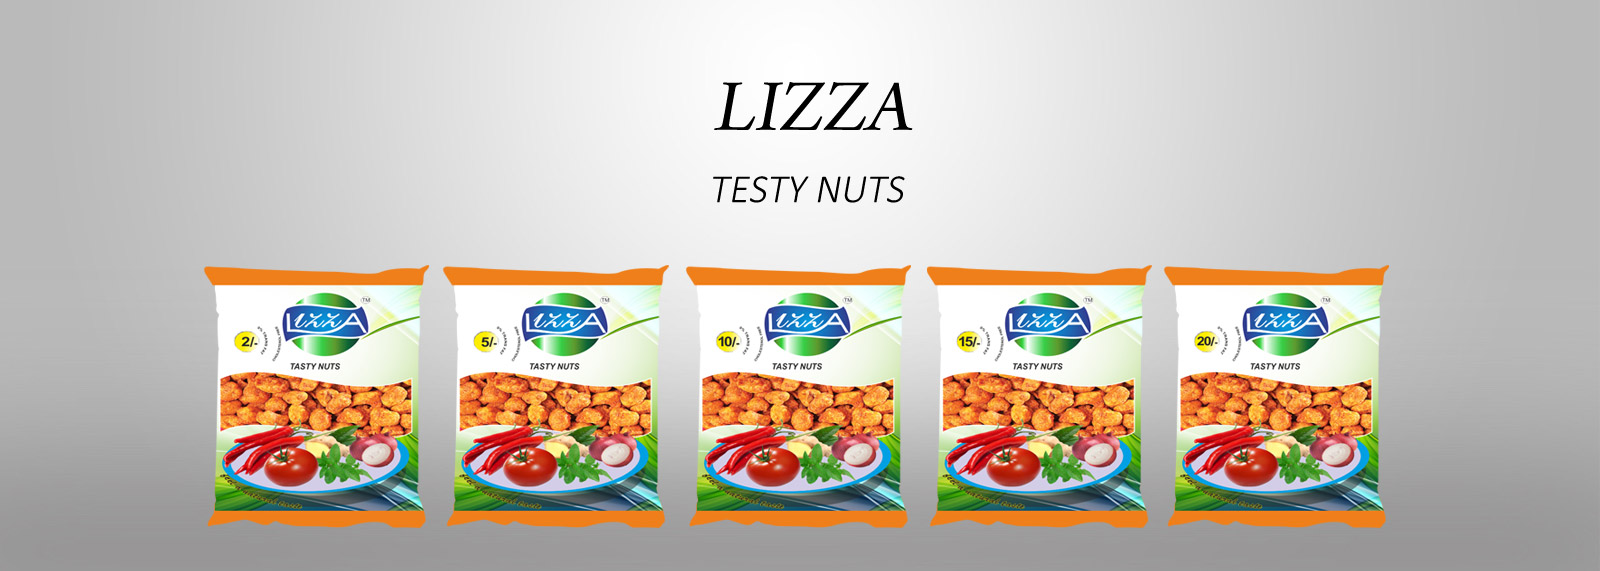 Lizza testy nuts